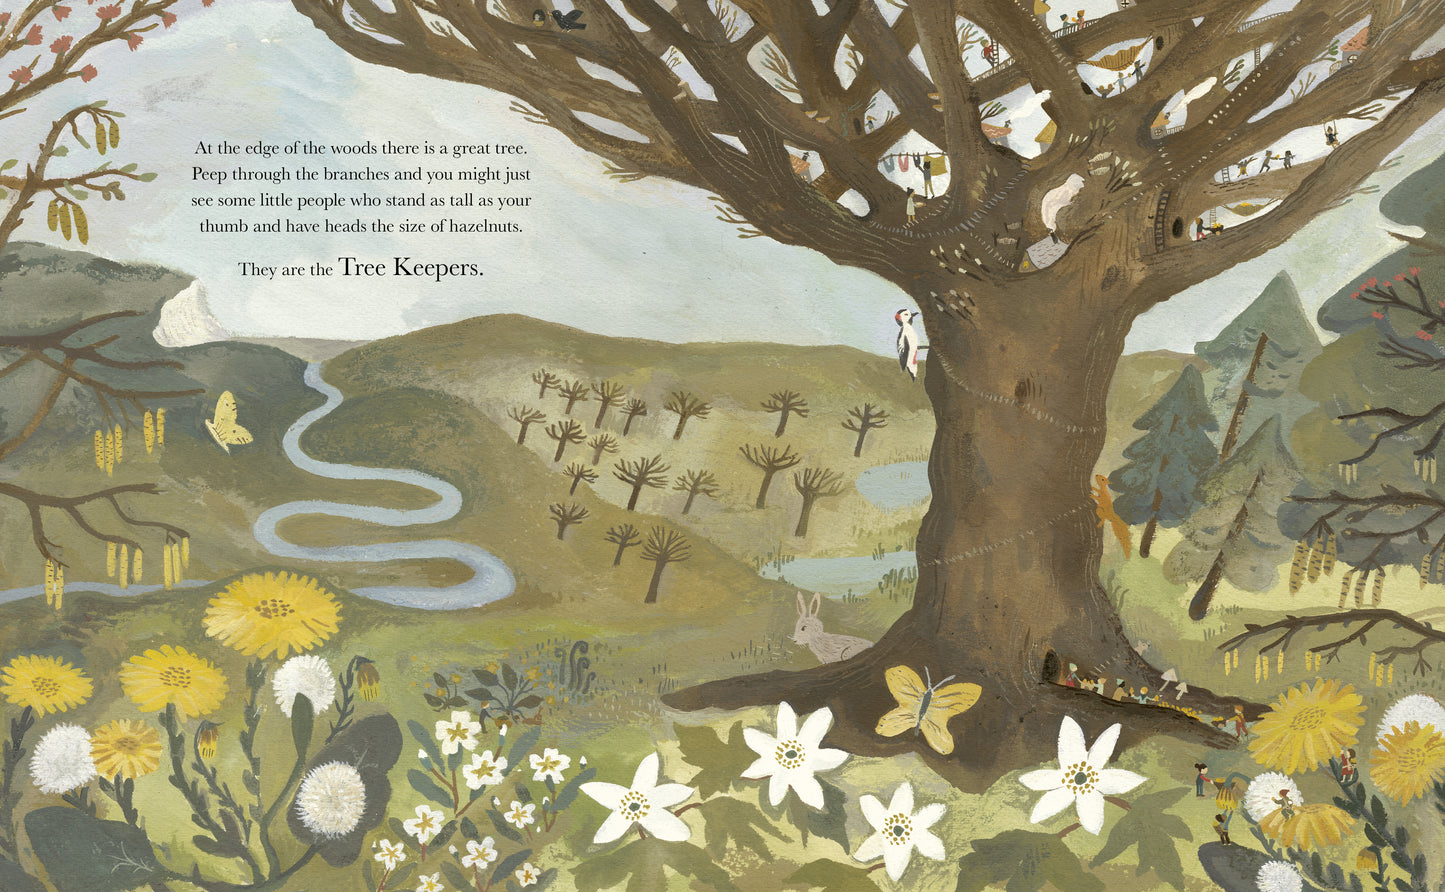 The Tree Keepers: Flock | Gemma Koomen